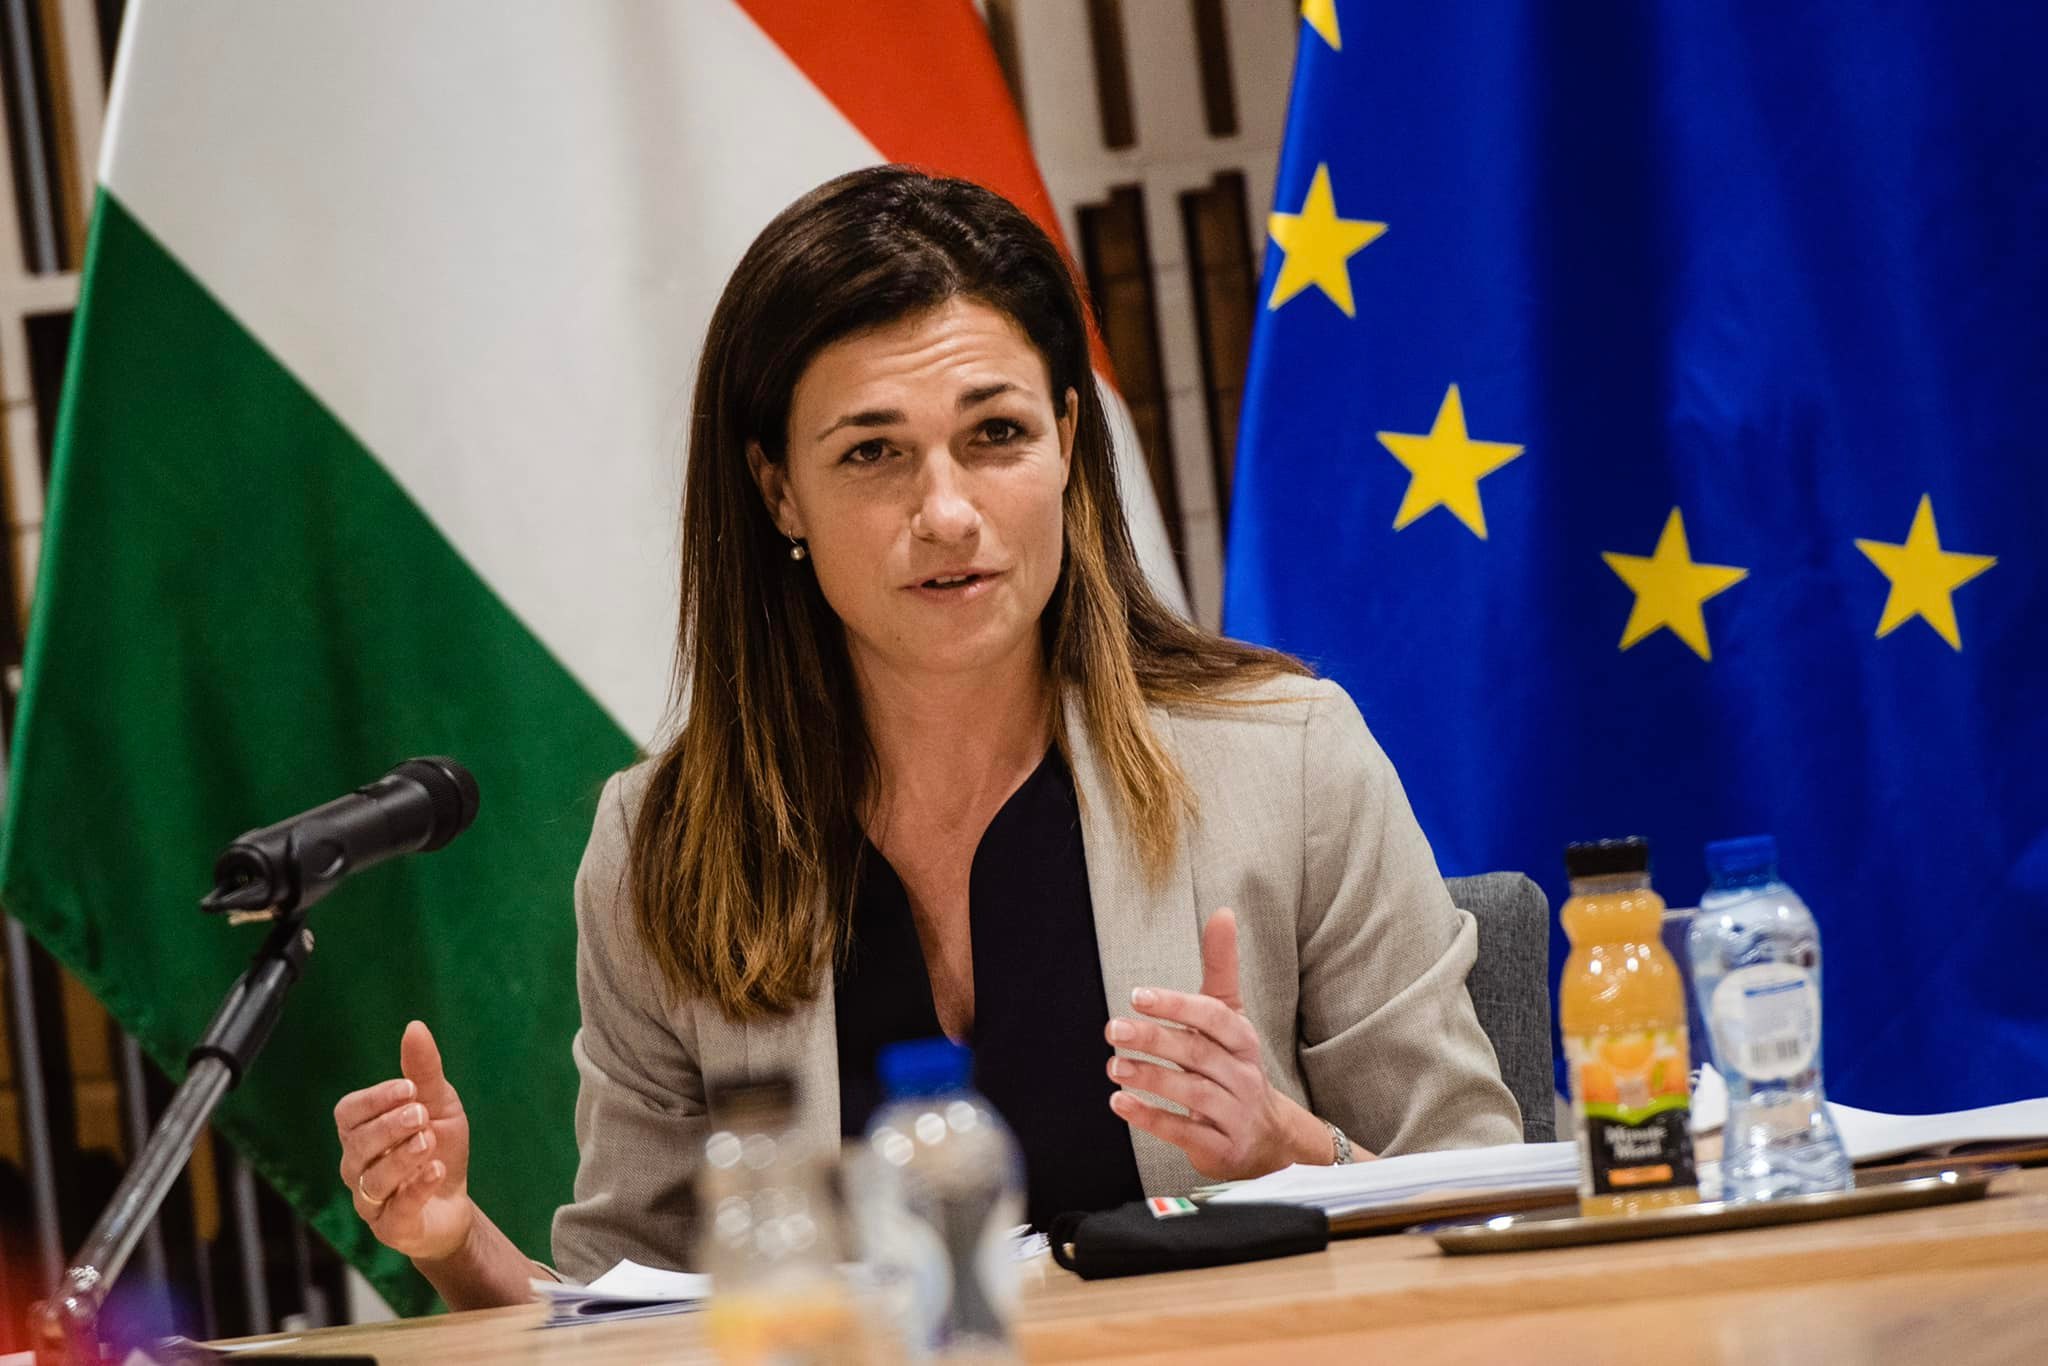 Justice Minister Varga Warns of 'Anti-Hungarian' Maneuver in the European Parliament